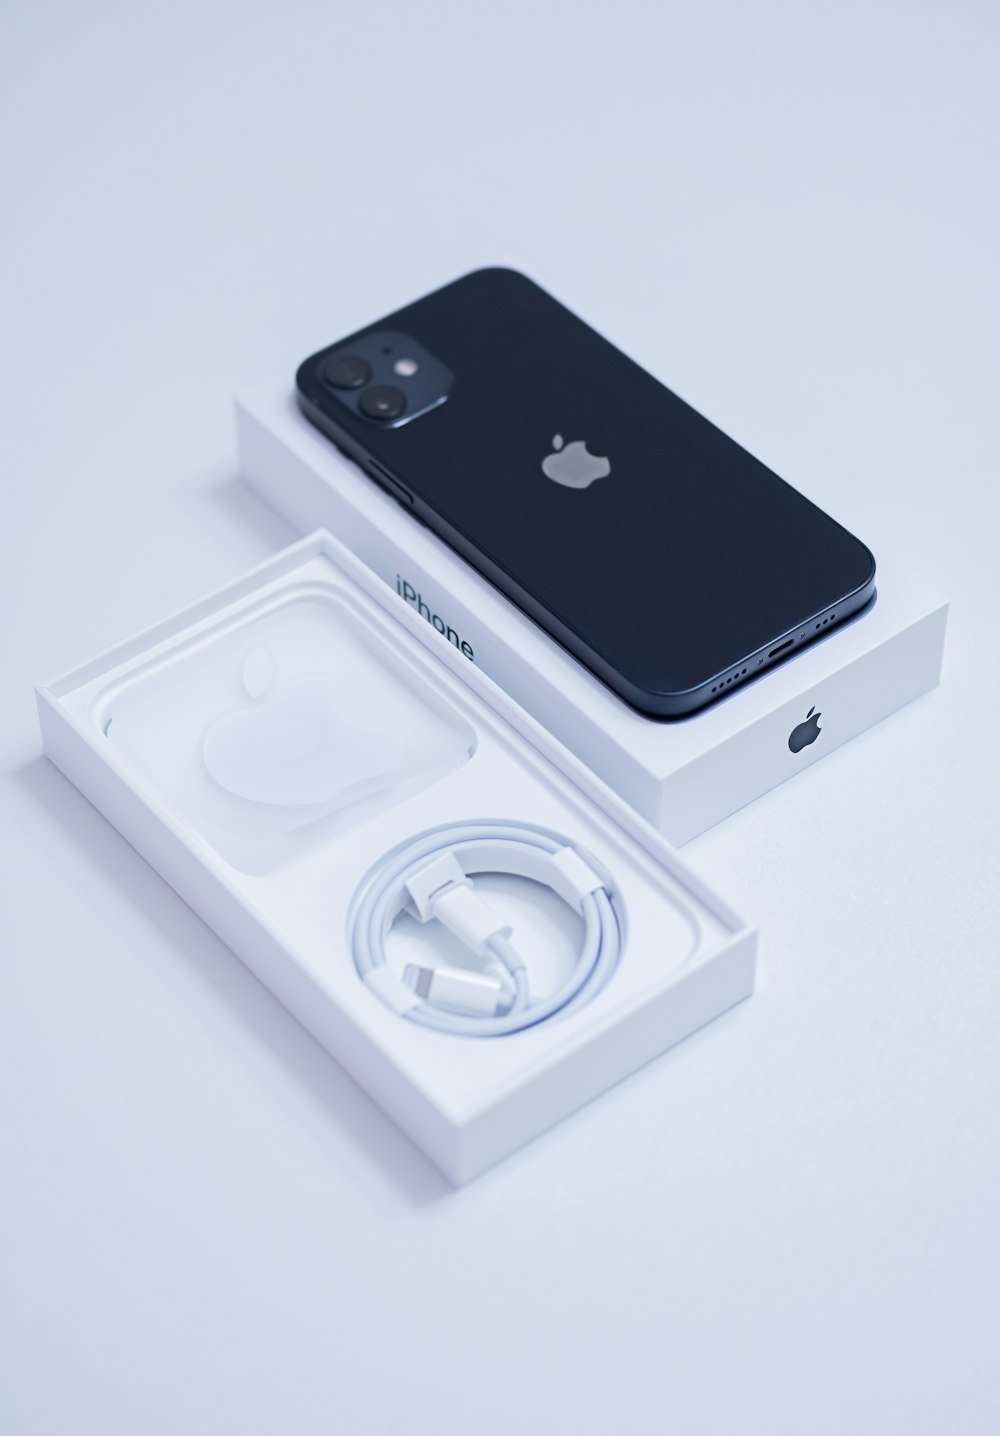 iPhone 7 nero su scatola bianca